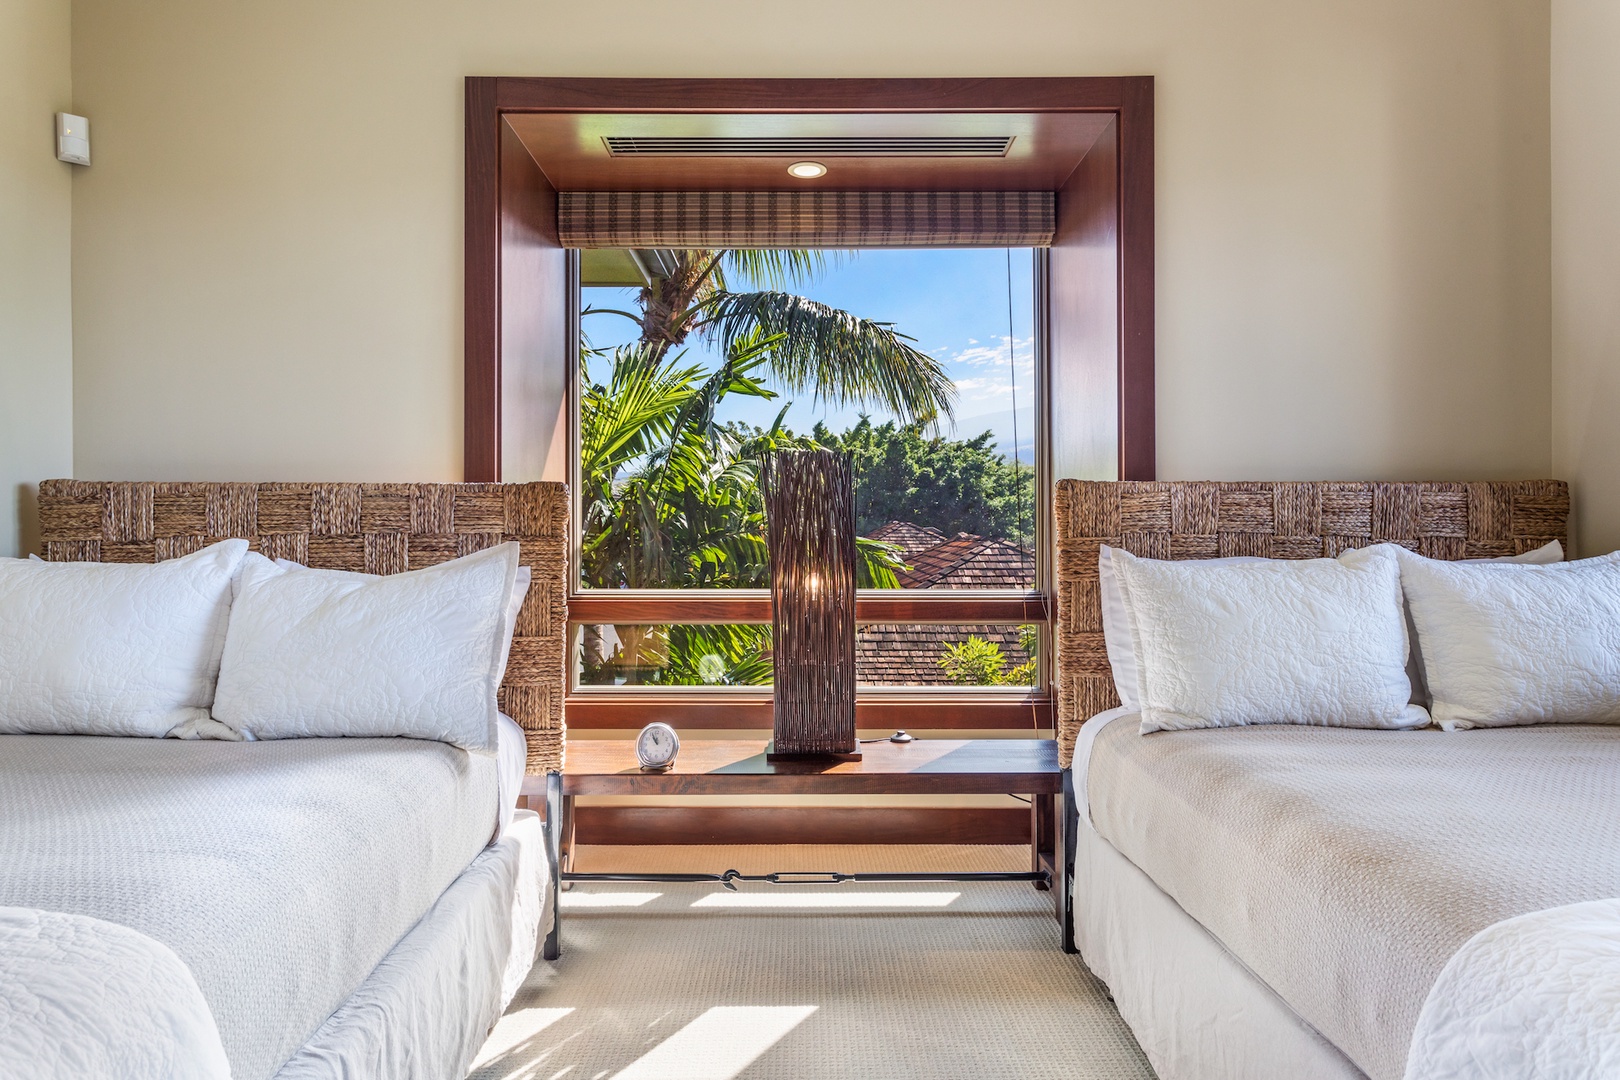 Kailua Kona Vacation Rentals, 3BD Hainoa Villa (2901D) at Four Seasons Resort at Hualalai - Alternative view of bedroom three.